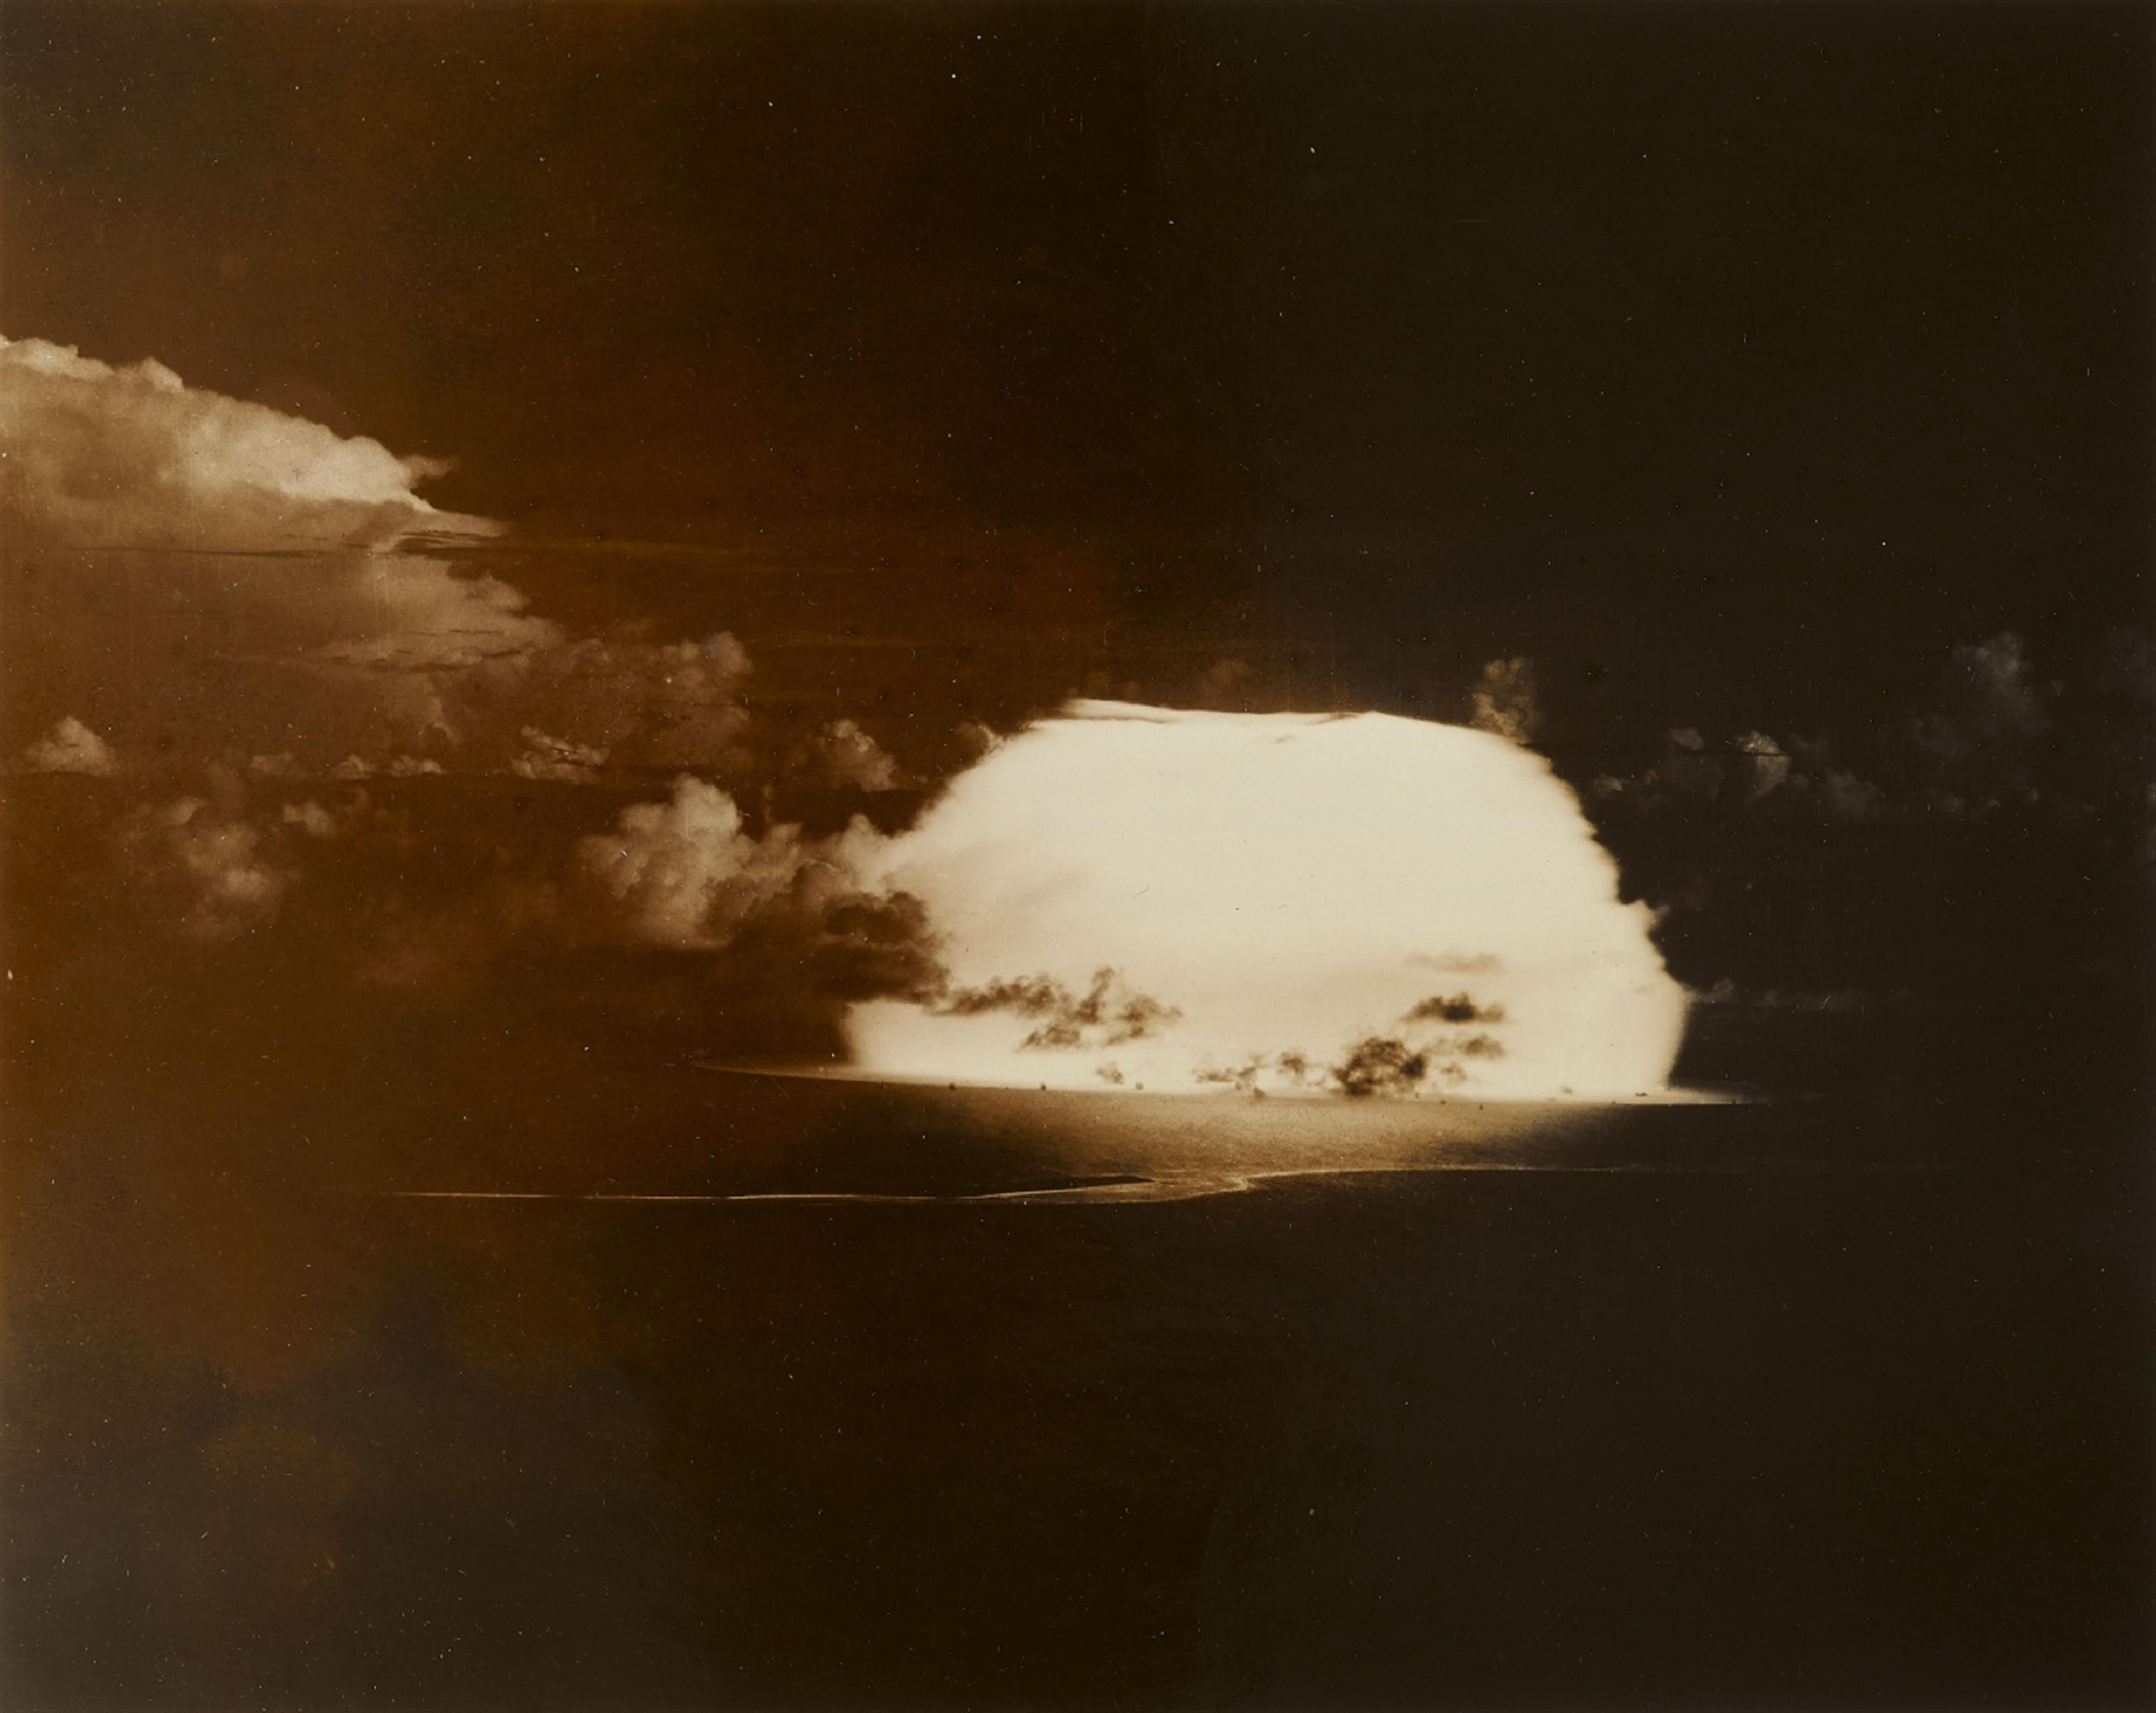 Joint Army Task Force One Photo - "Operation Crossroads" - Aufnahmen der Atombomben-Tests auf dem Bikini-Atoll - image-8